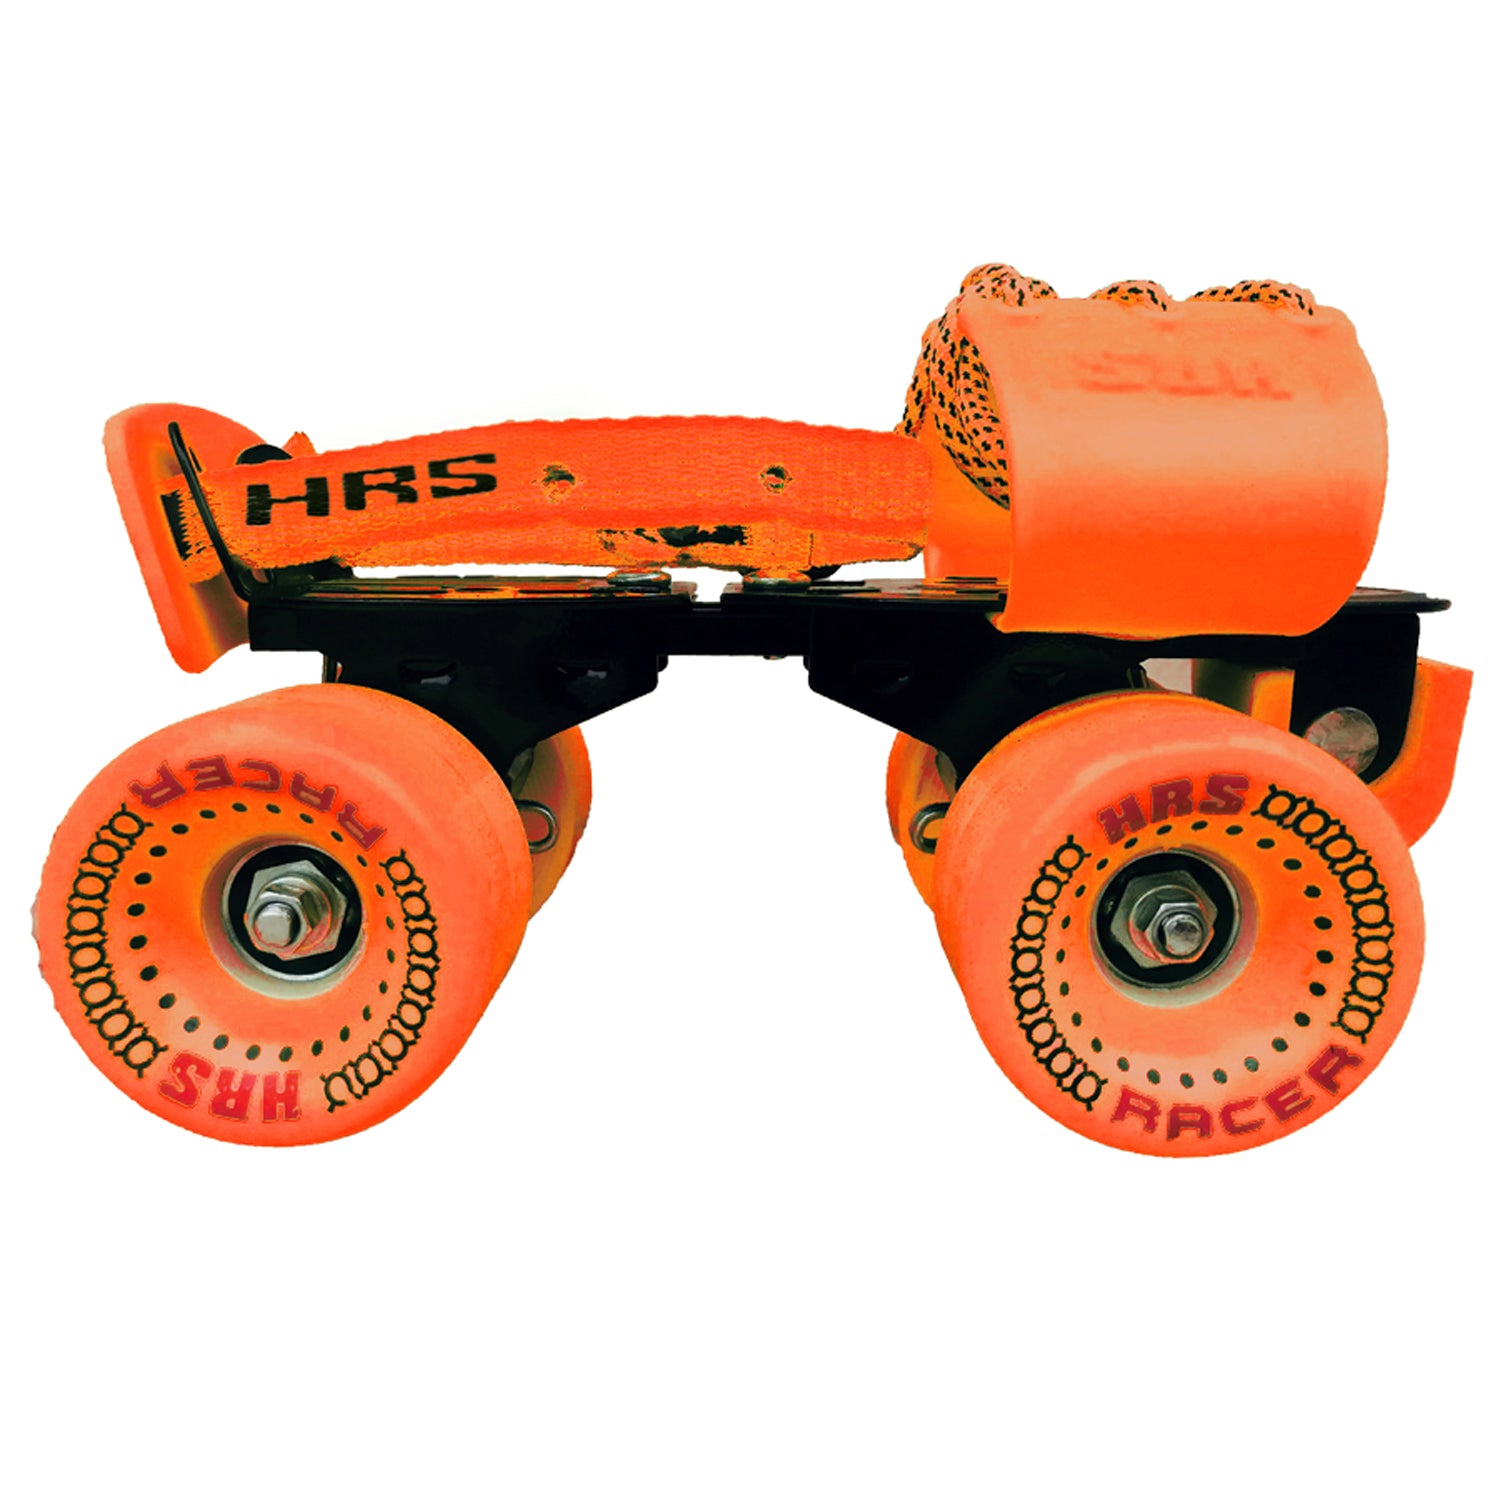 HRS SK-103 Super Tenacity Racer Roller Skates, Orange - Best Price online Prokicksports.com